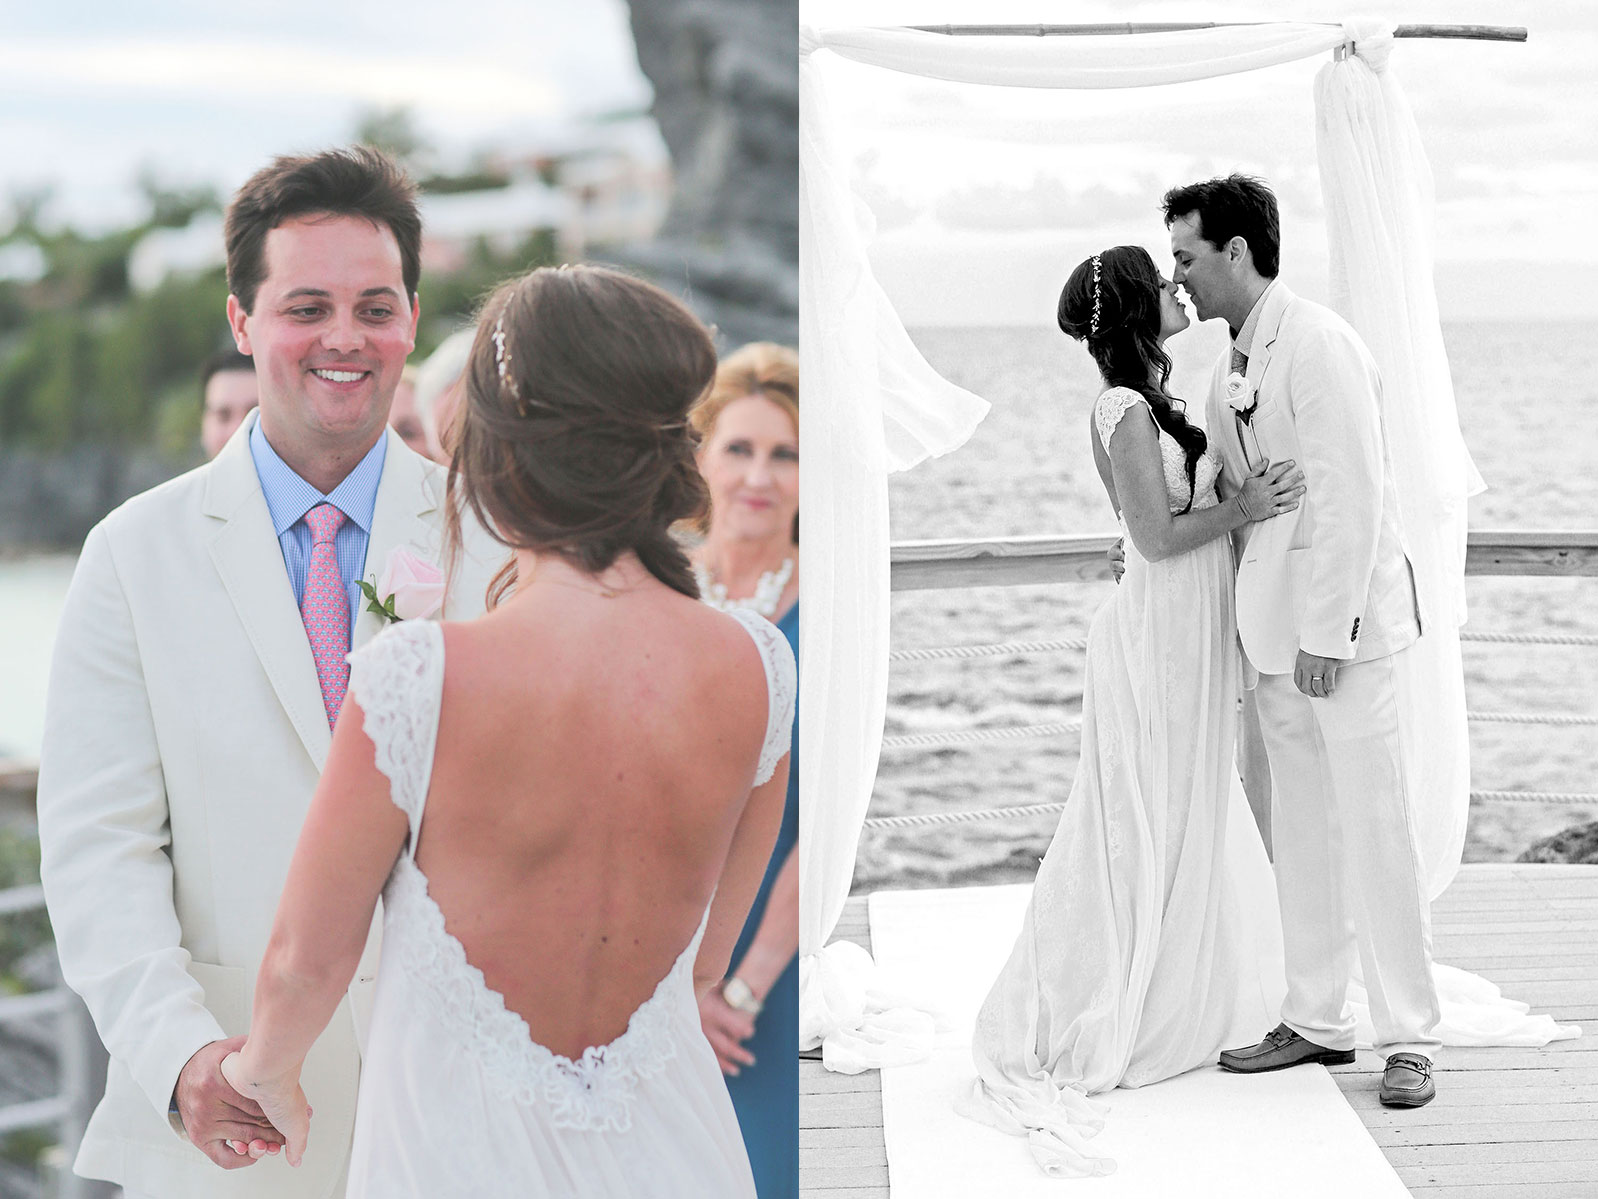 21-JM-BERMDUA-WEDDING-PHOTOGRAPHY-BRIDE-GROOM-DESTINATION-PHOTOGRAPHER-ISLAND-TROPICAL.jpg